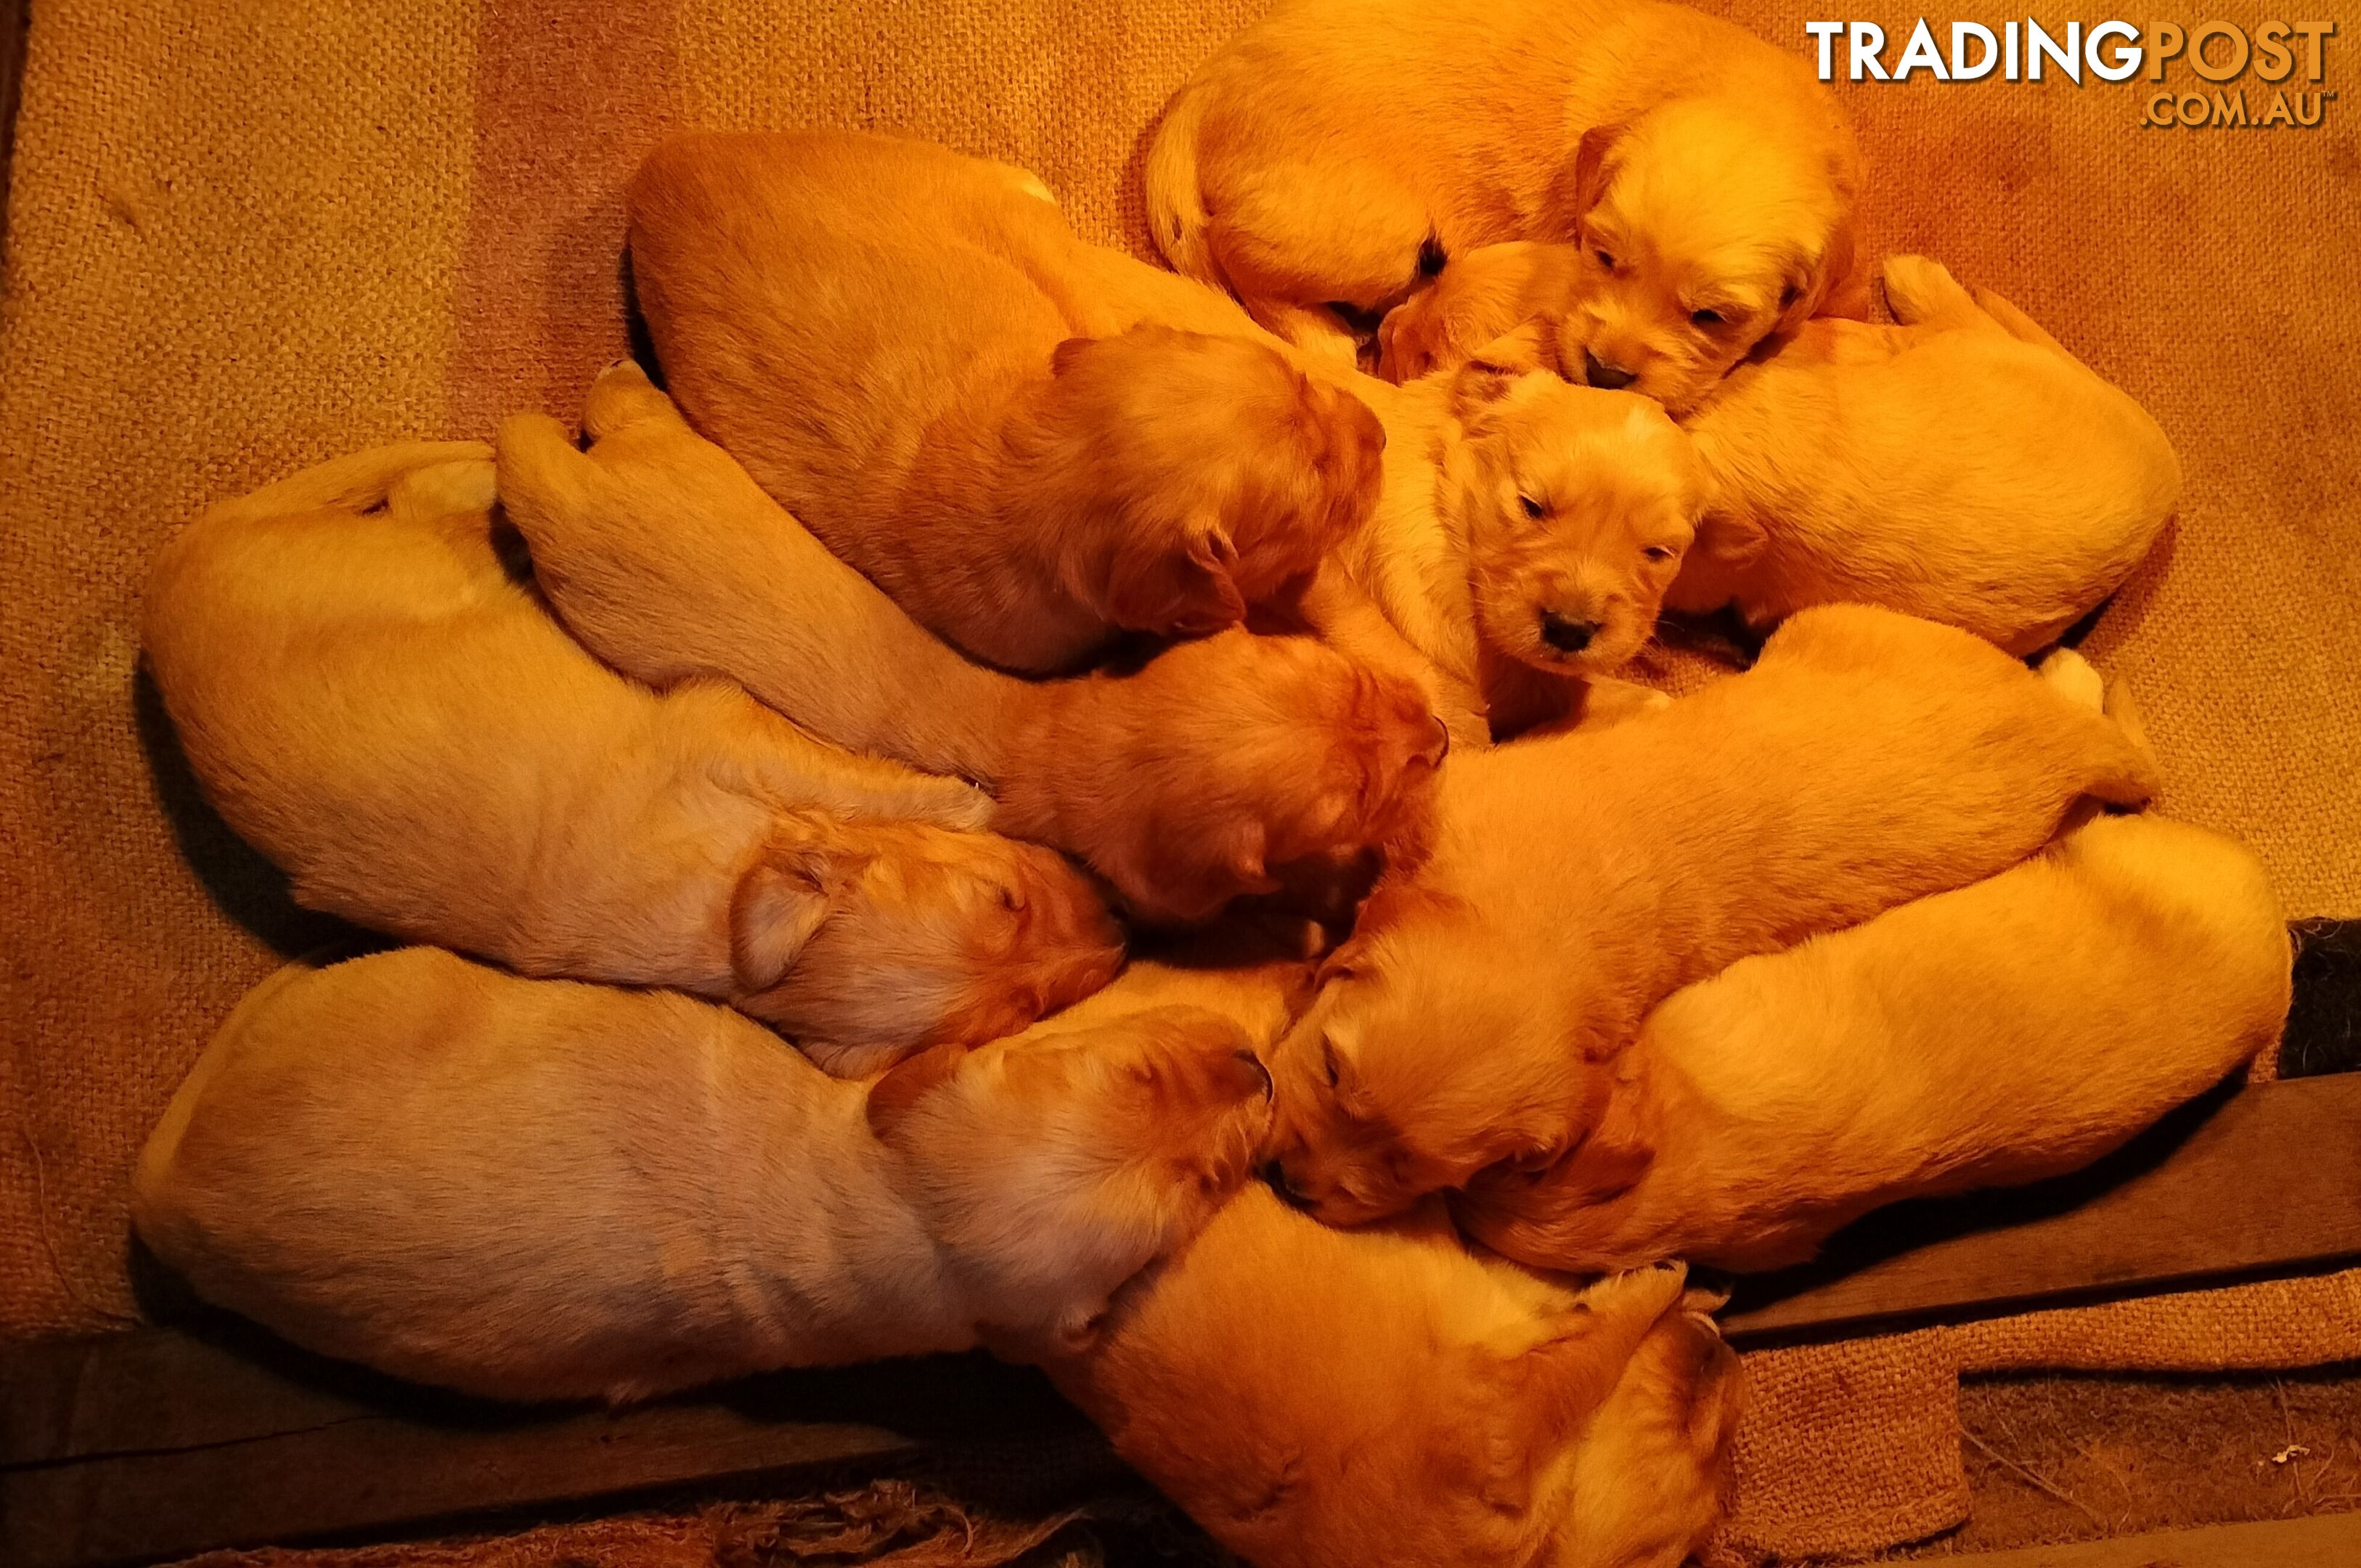 Purebred puppies gold retriever.